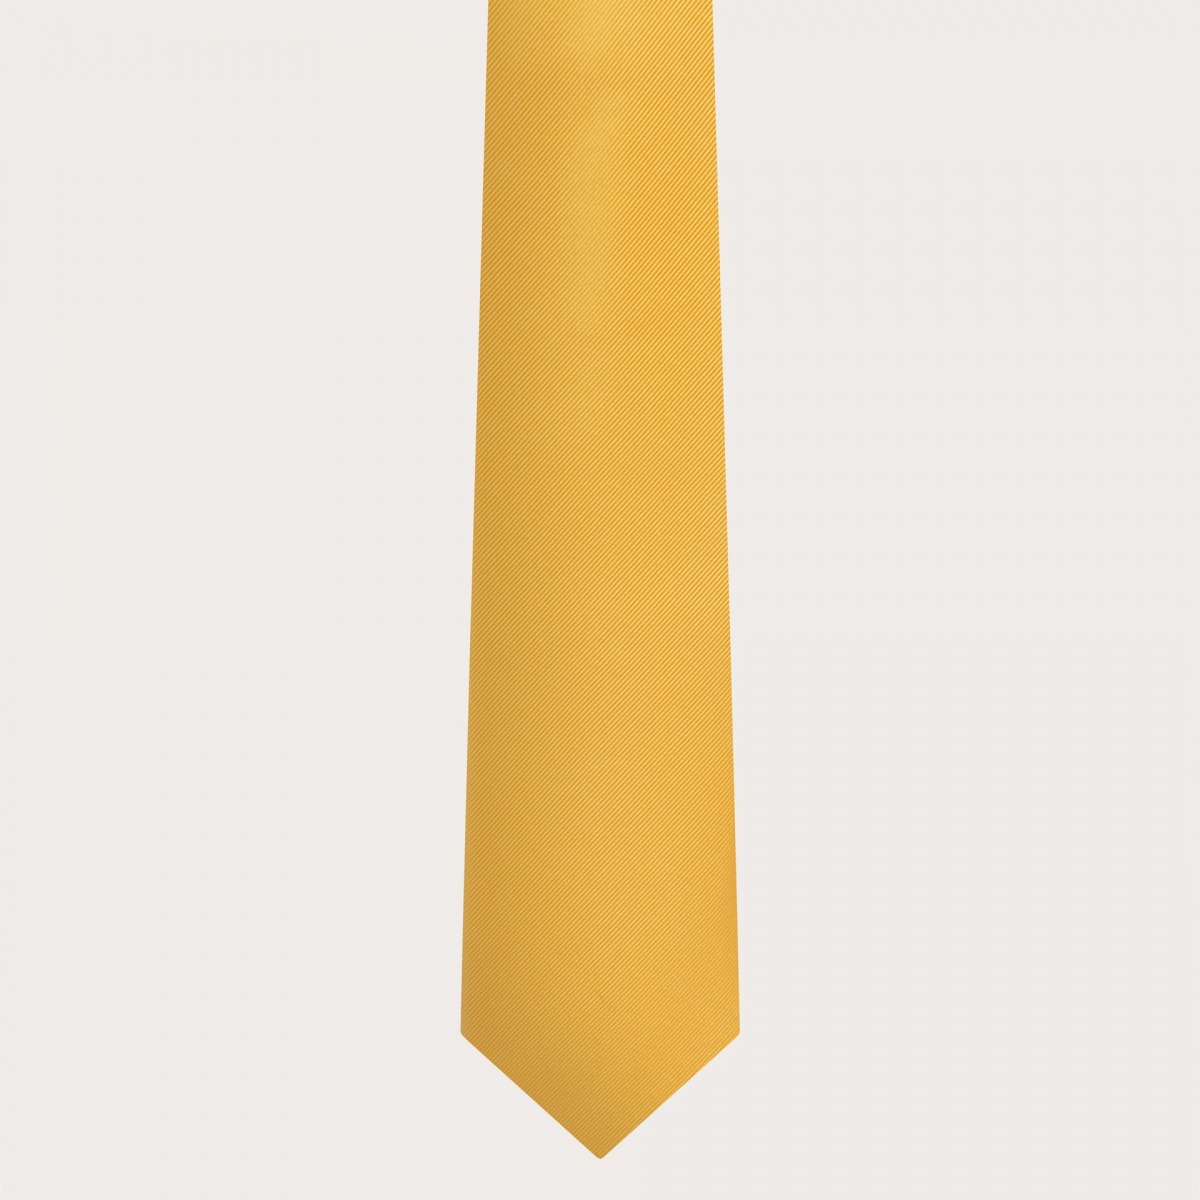 BRUCLE Corbata amarilla de seda jacquard